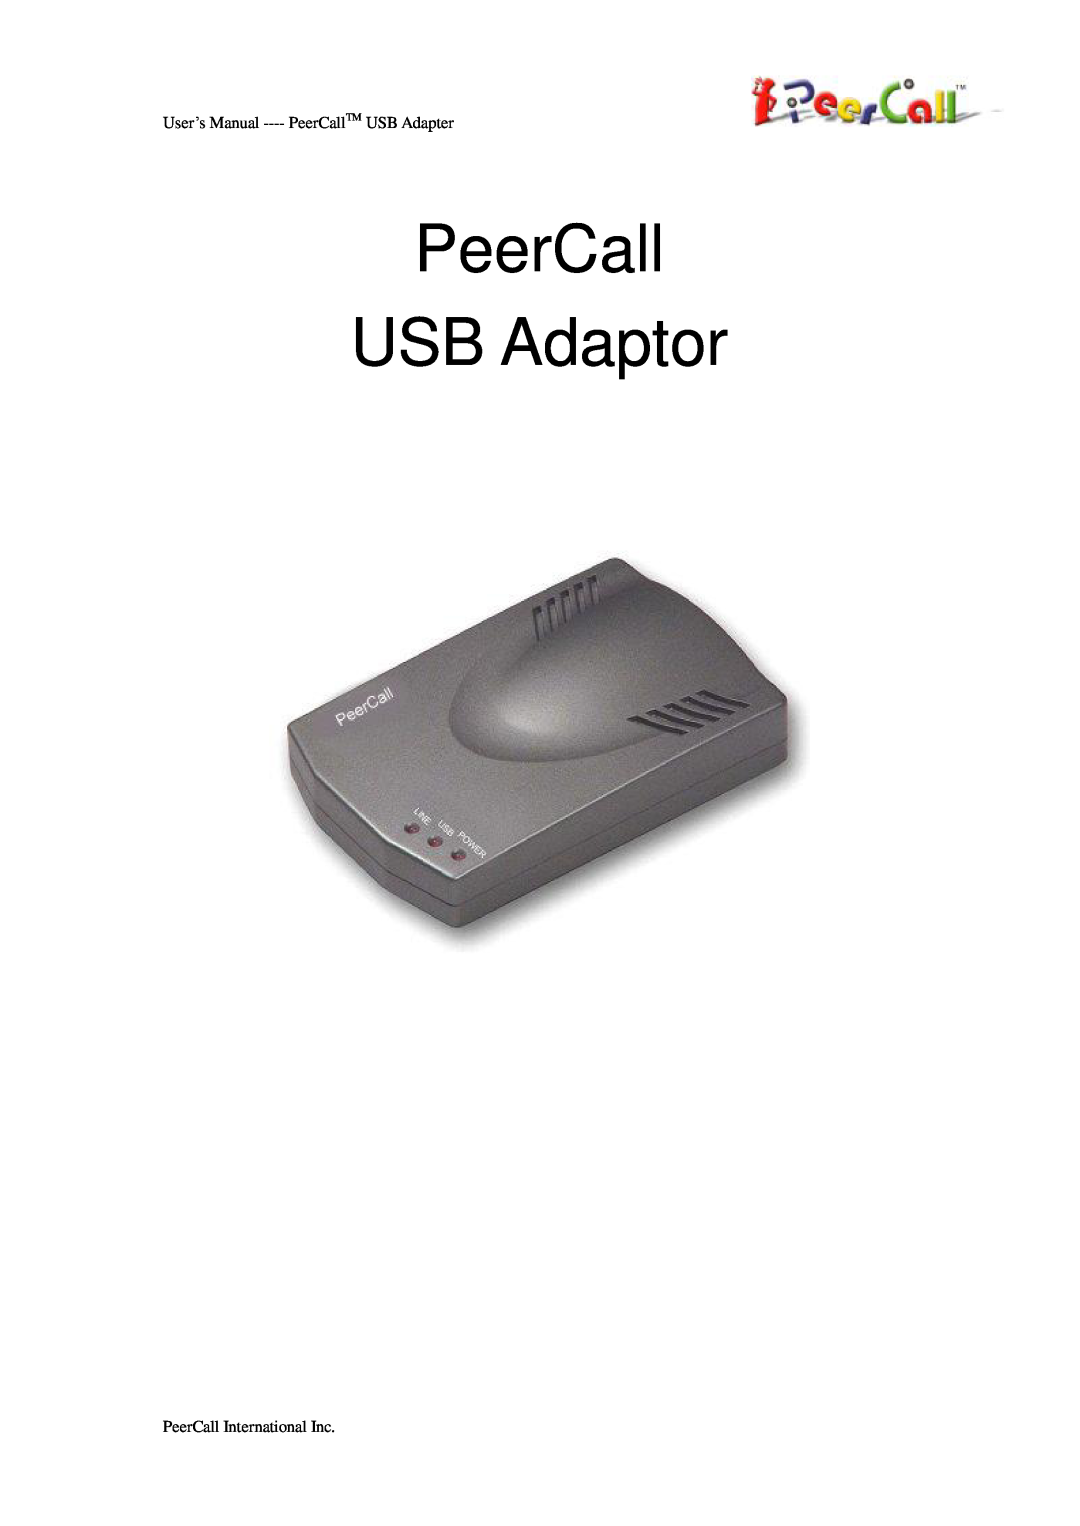 PeerCall manual PeerCall USB Adaptor, User’s Manual ---- PeerCallTM USB Adapter, PeerCall International Inc 